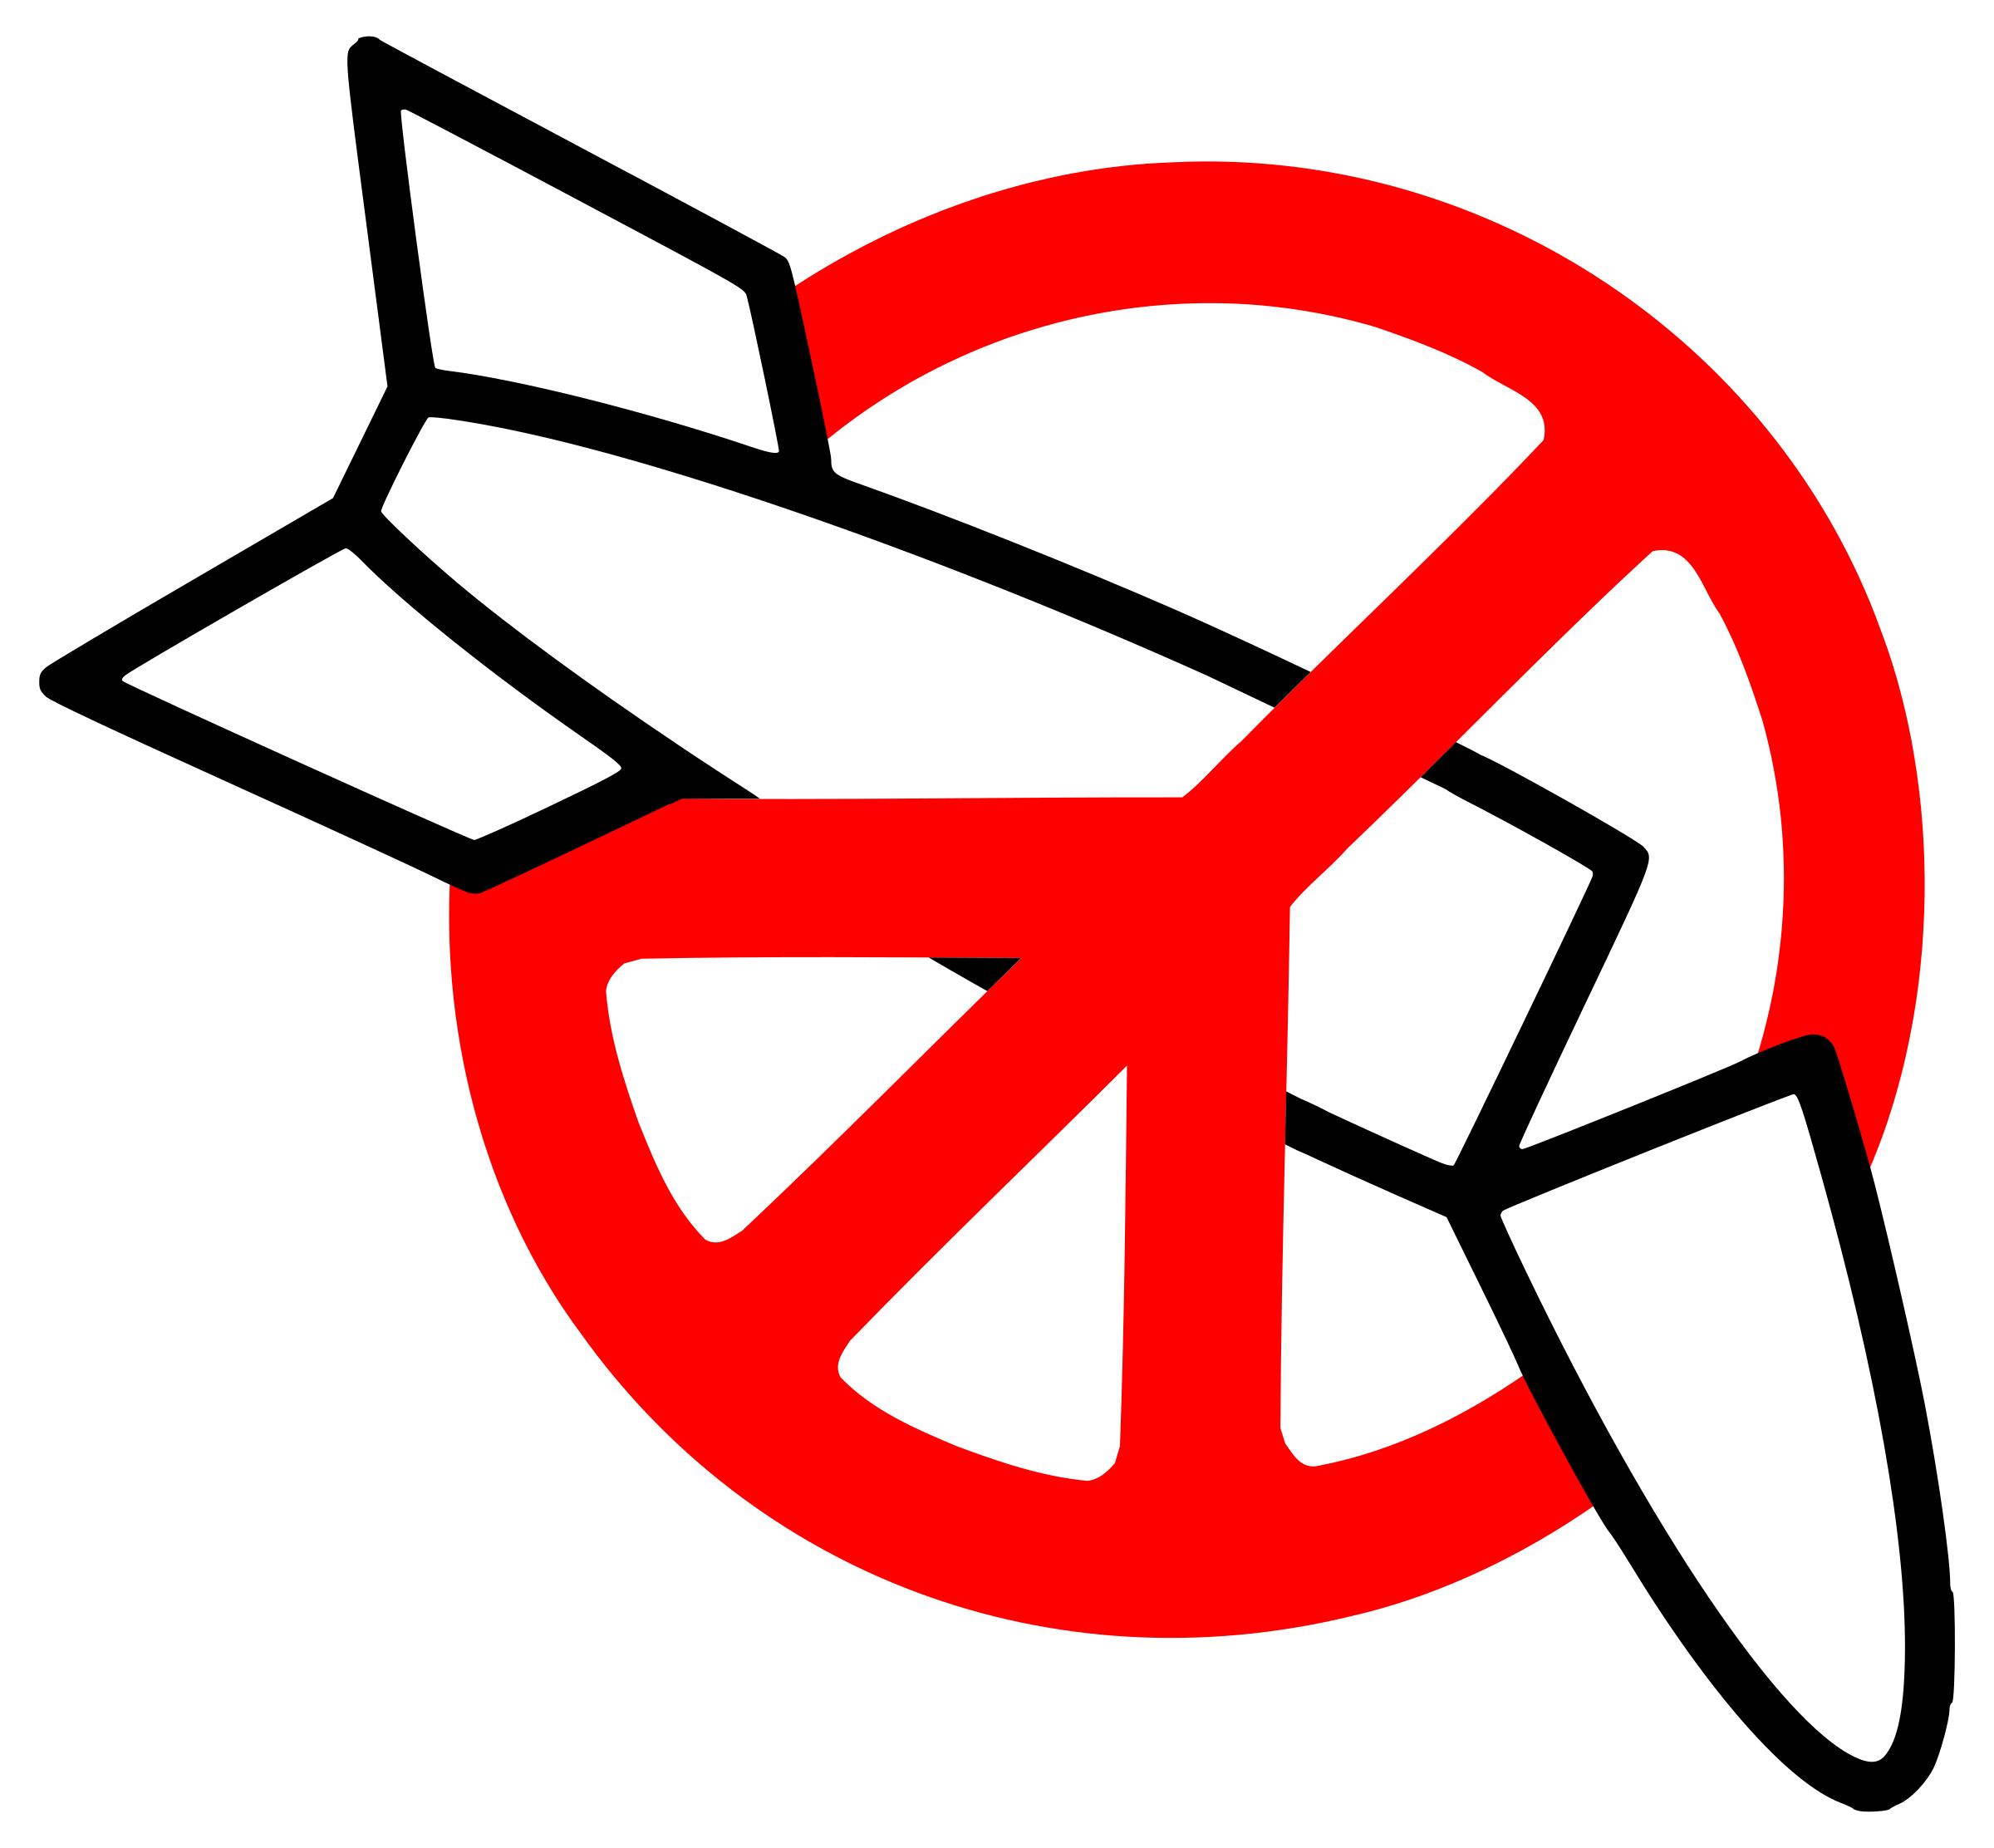 peace - no war PNG icons